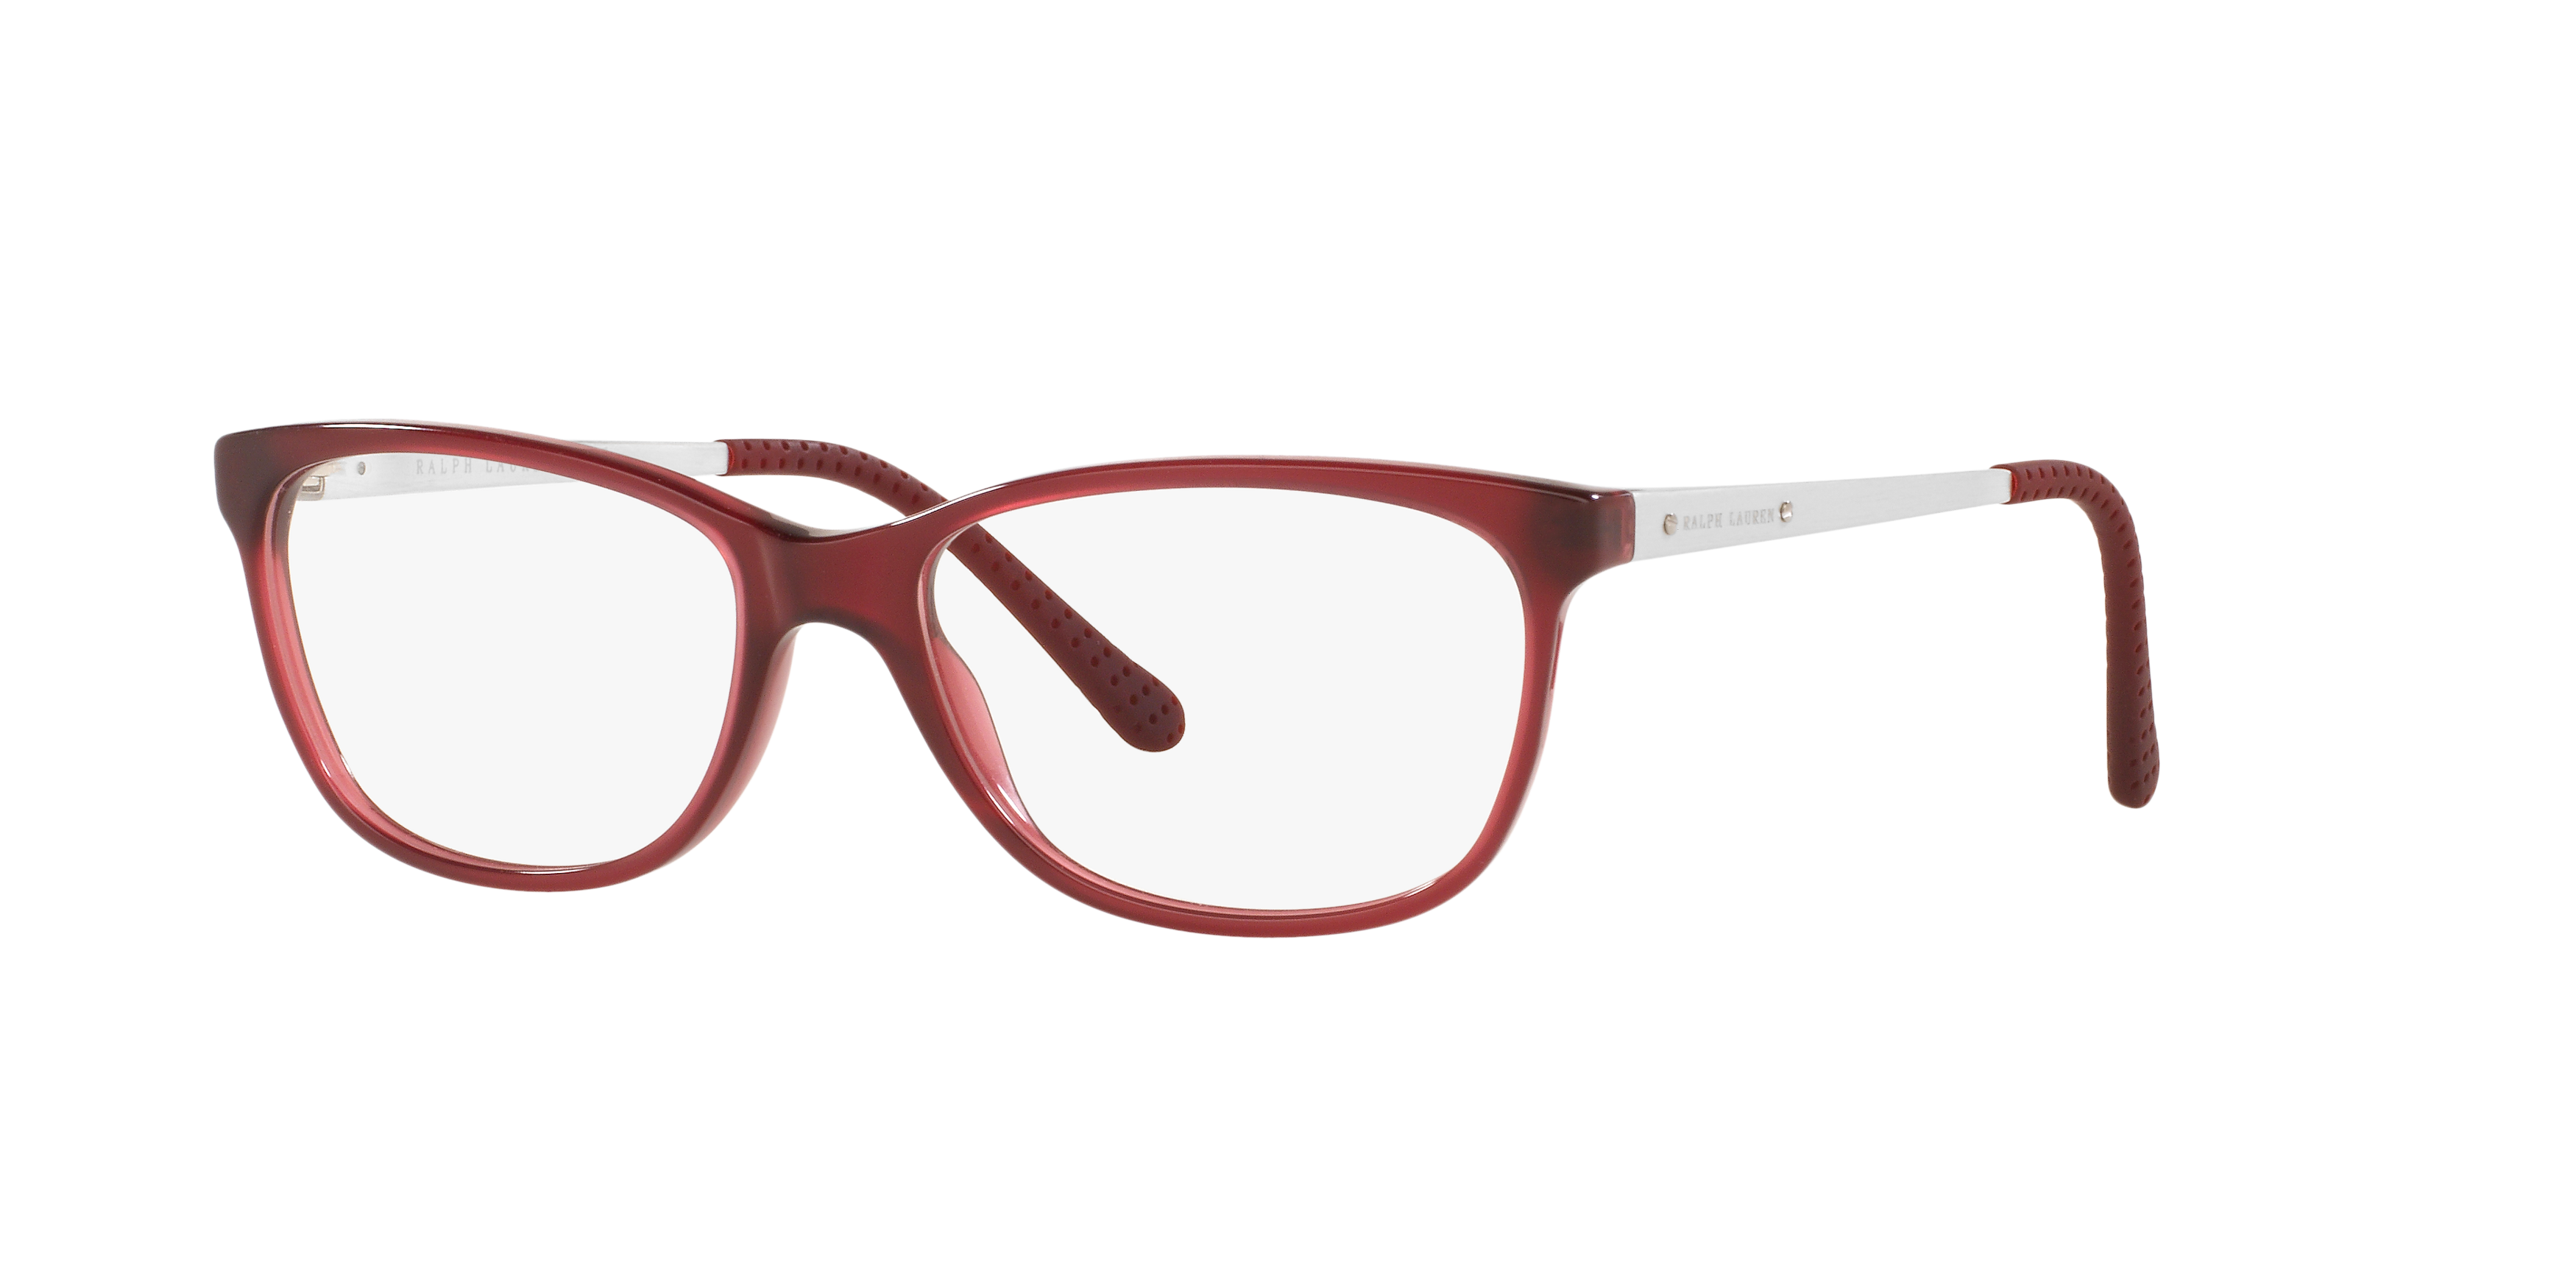 Angle_Left01 Ralph Lauren RL 6135 (5144) Glasses Transparent / Red